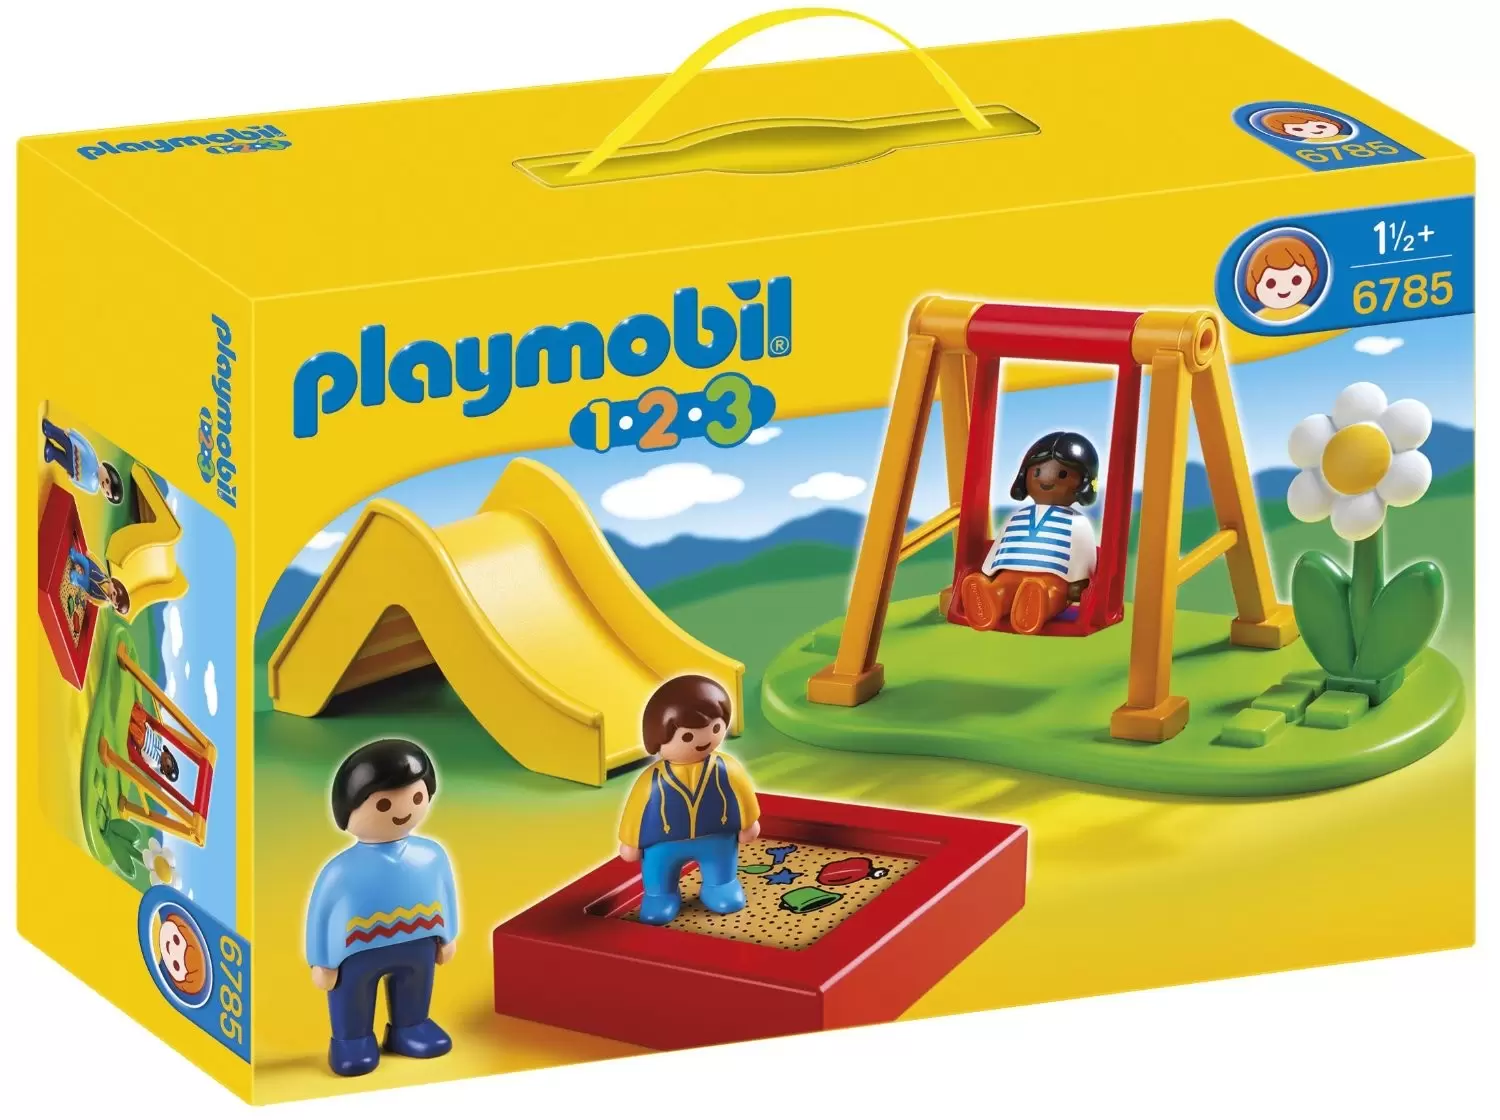 Parc de jeux playmobil - Playmobil | Beebs